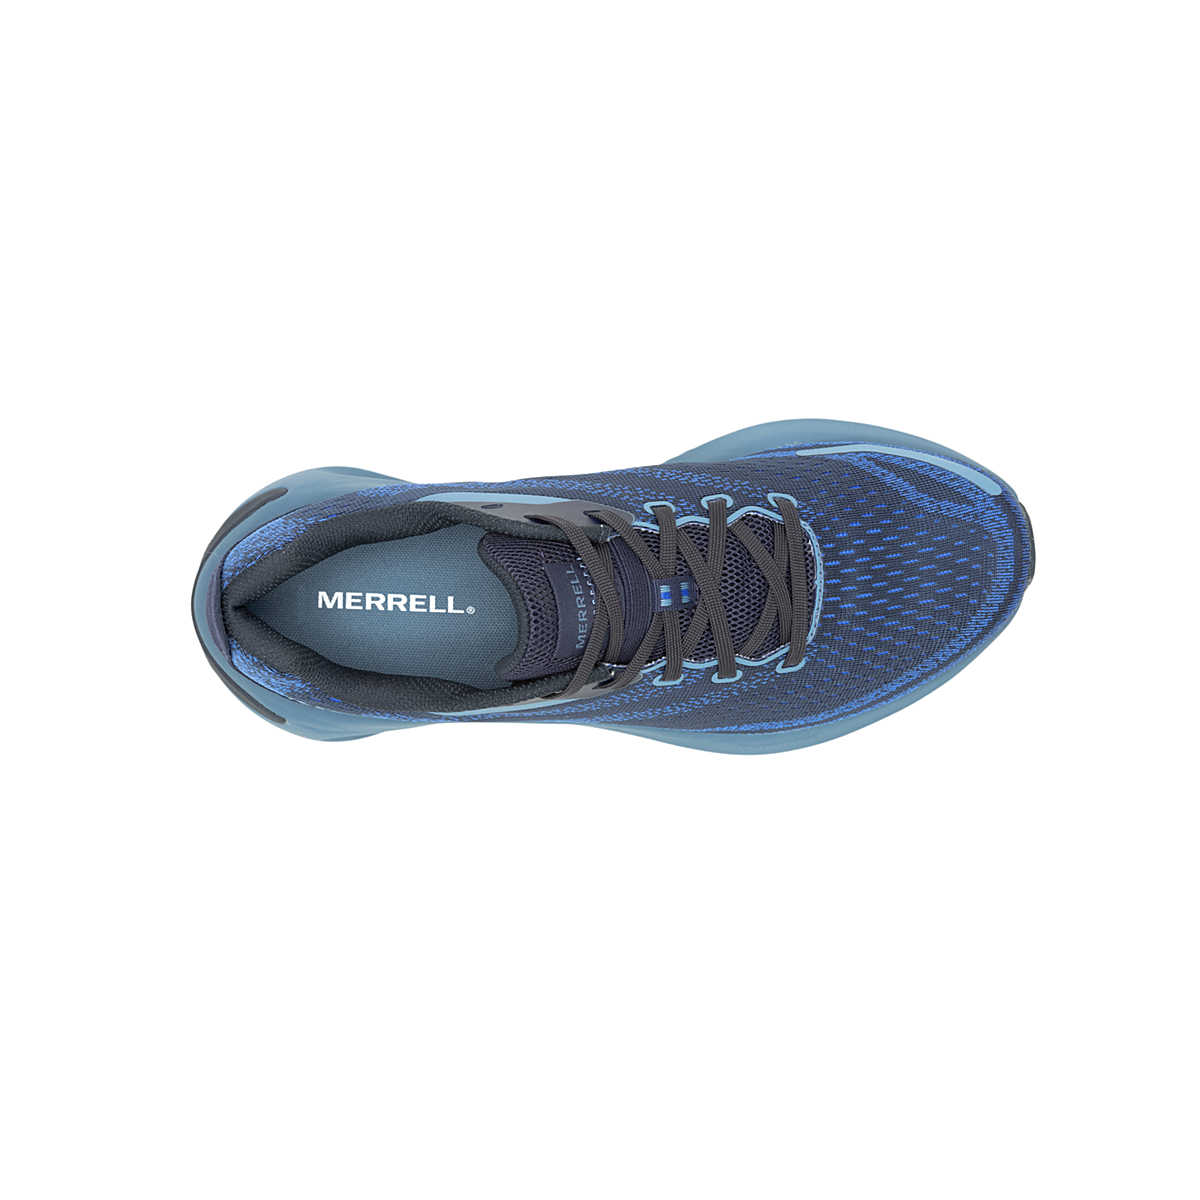 Merrel Men's Morphlite Trail Running Sneakers - Sea/Dazzle